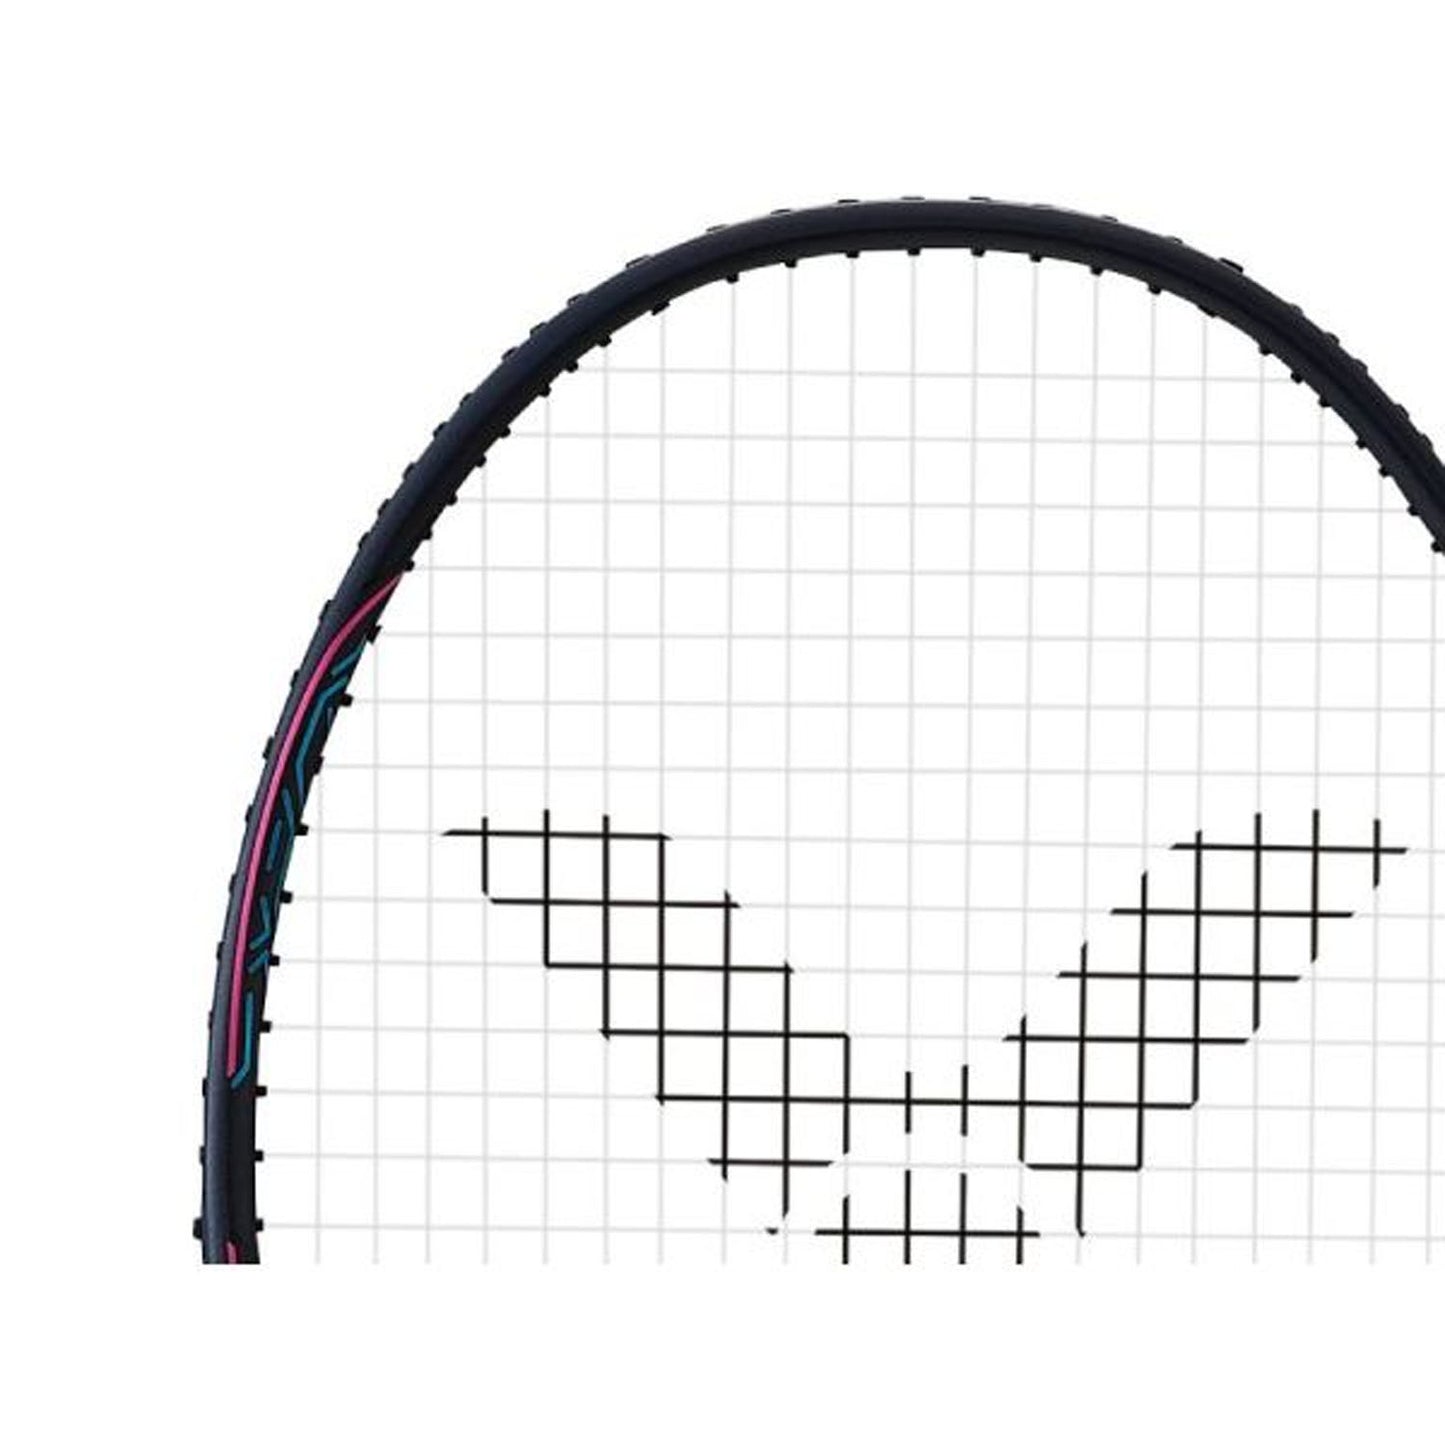 Victor Drive X 9X Unstrung Badminton Racquet, Sapphire - Best Price online Prokicksports.com